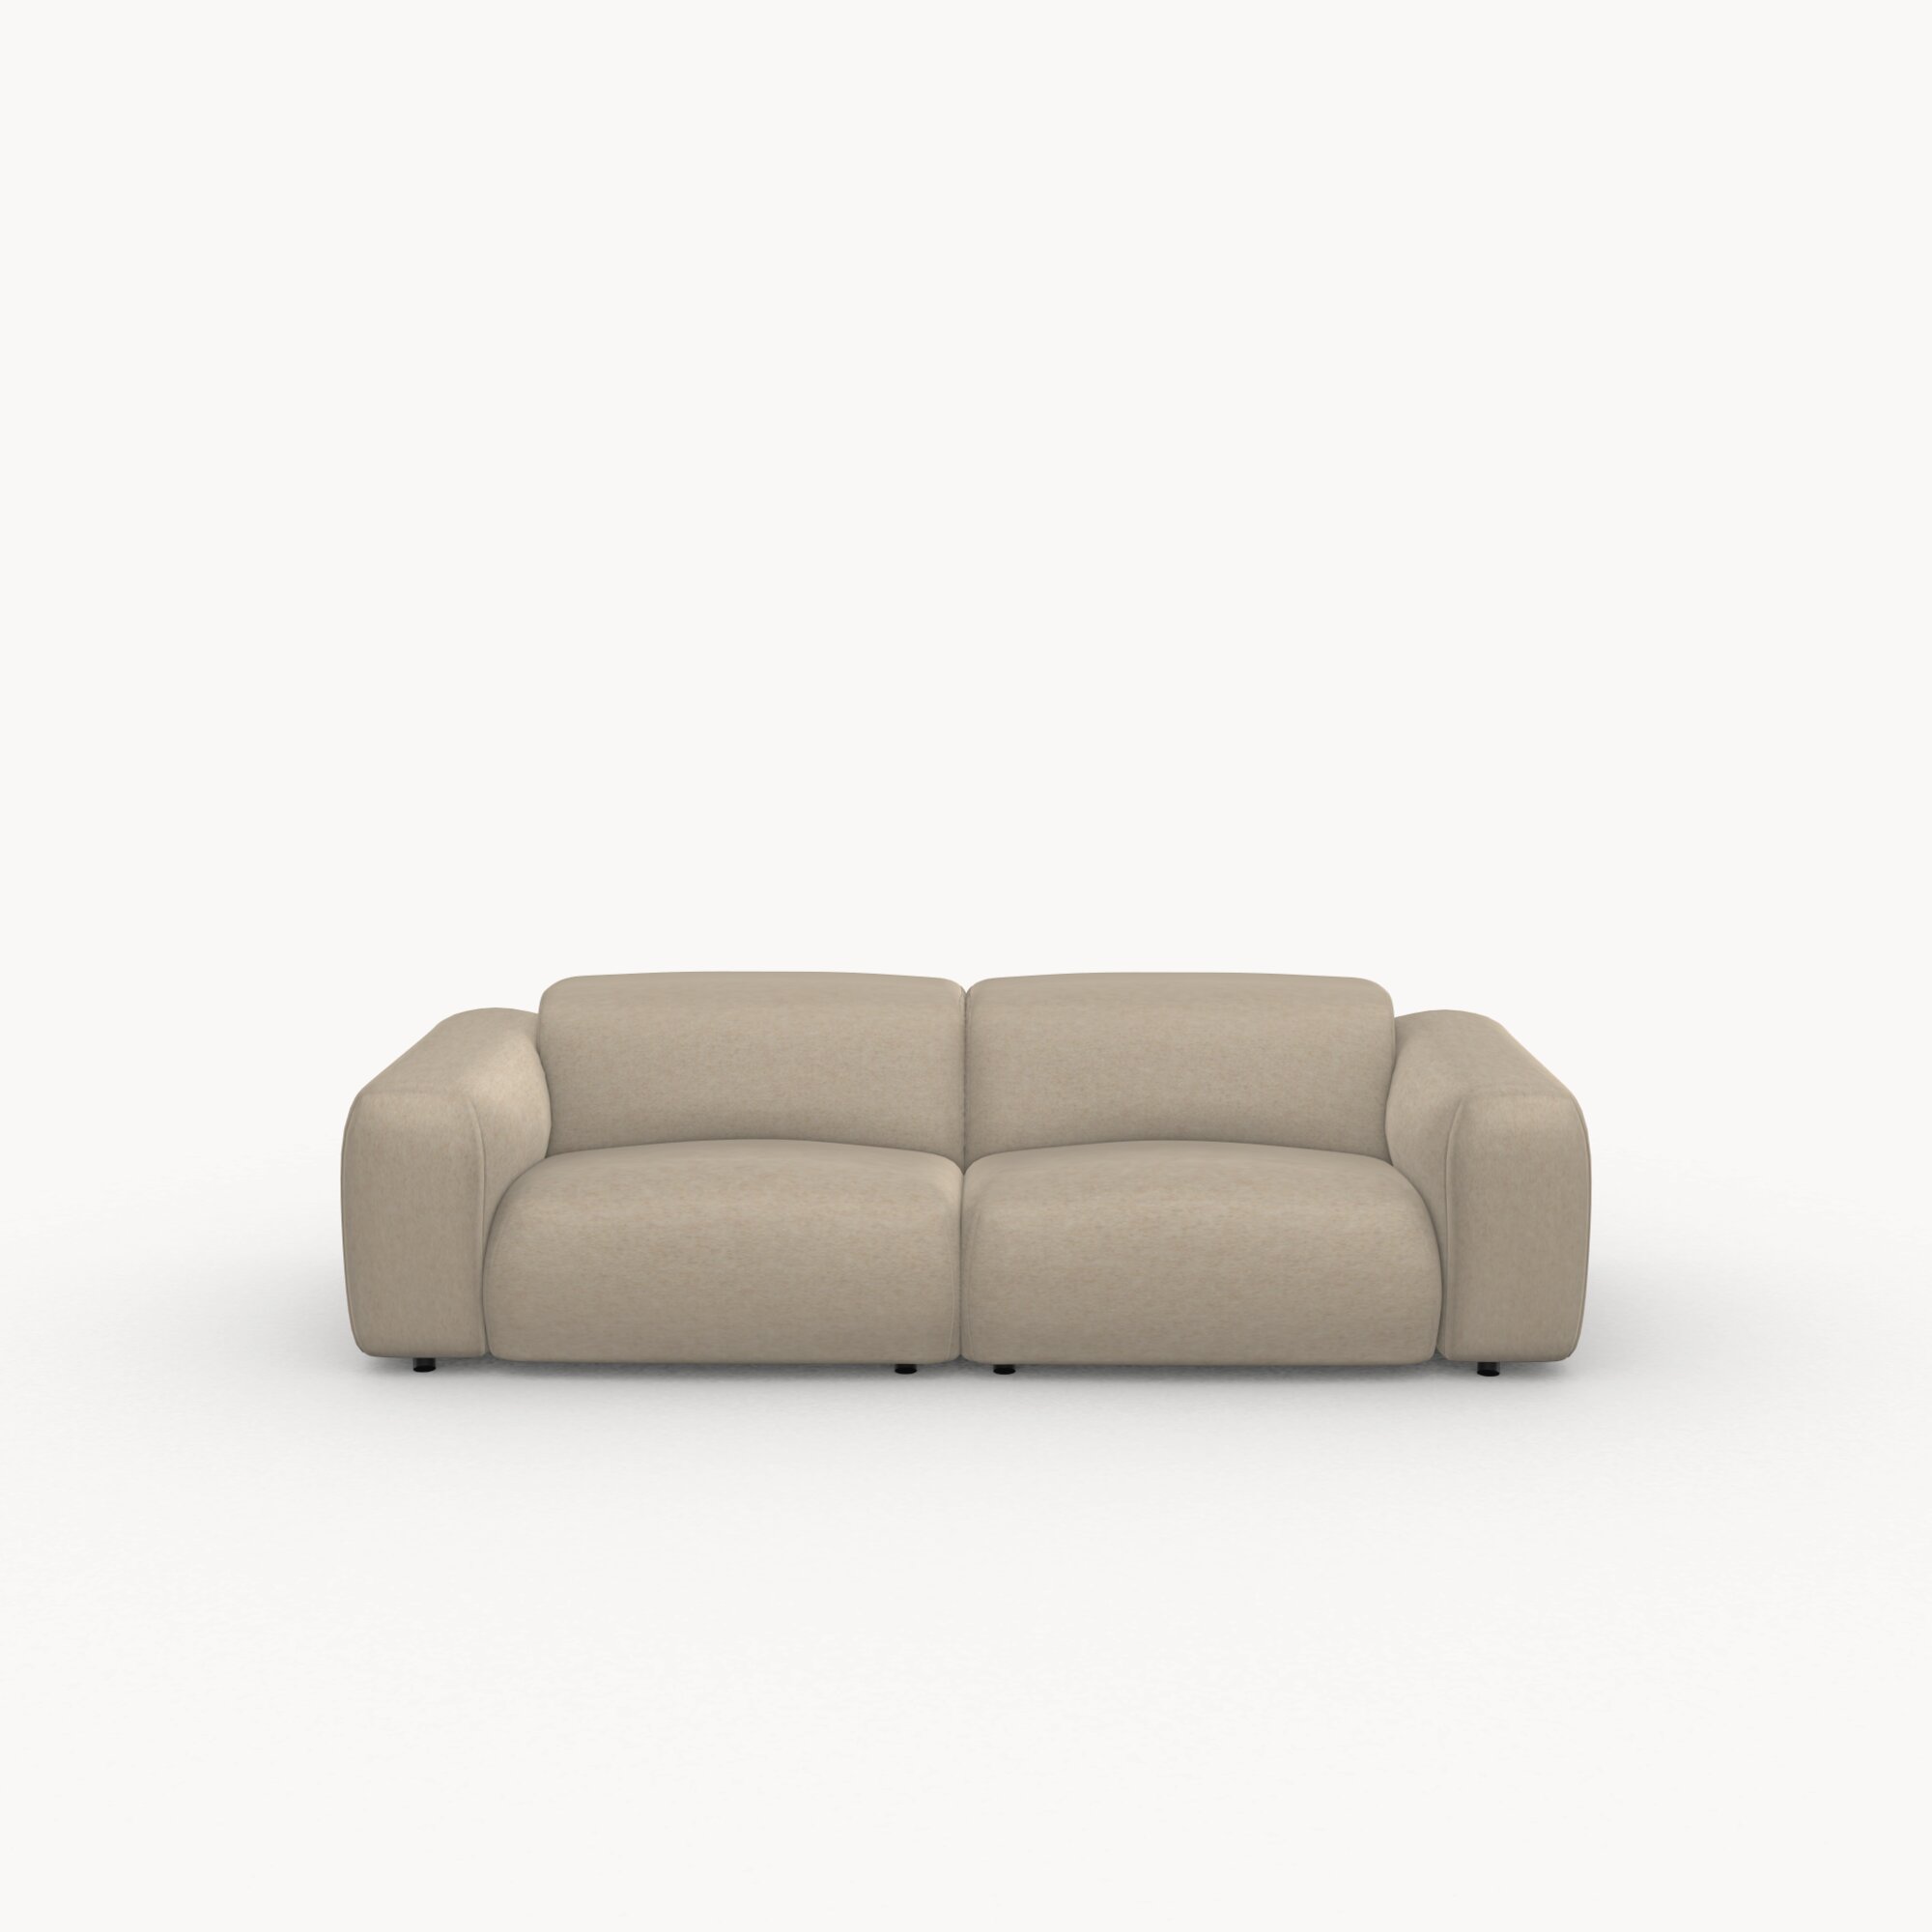 google_sofa_title_suffix | Cosy Sofa 1,5 seater arm left facet beige1037 | Studio HENK| 